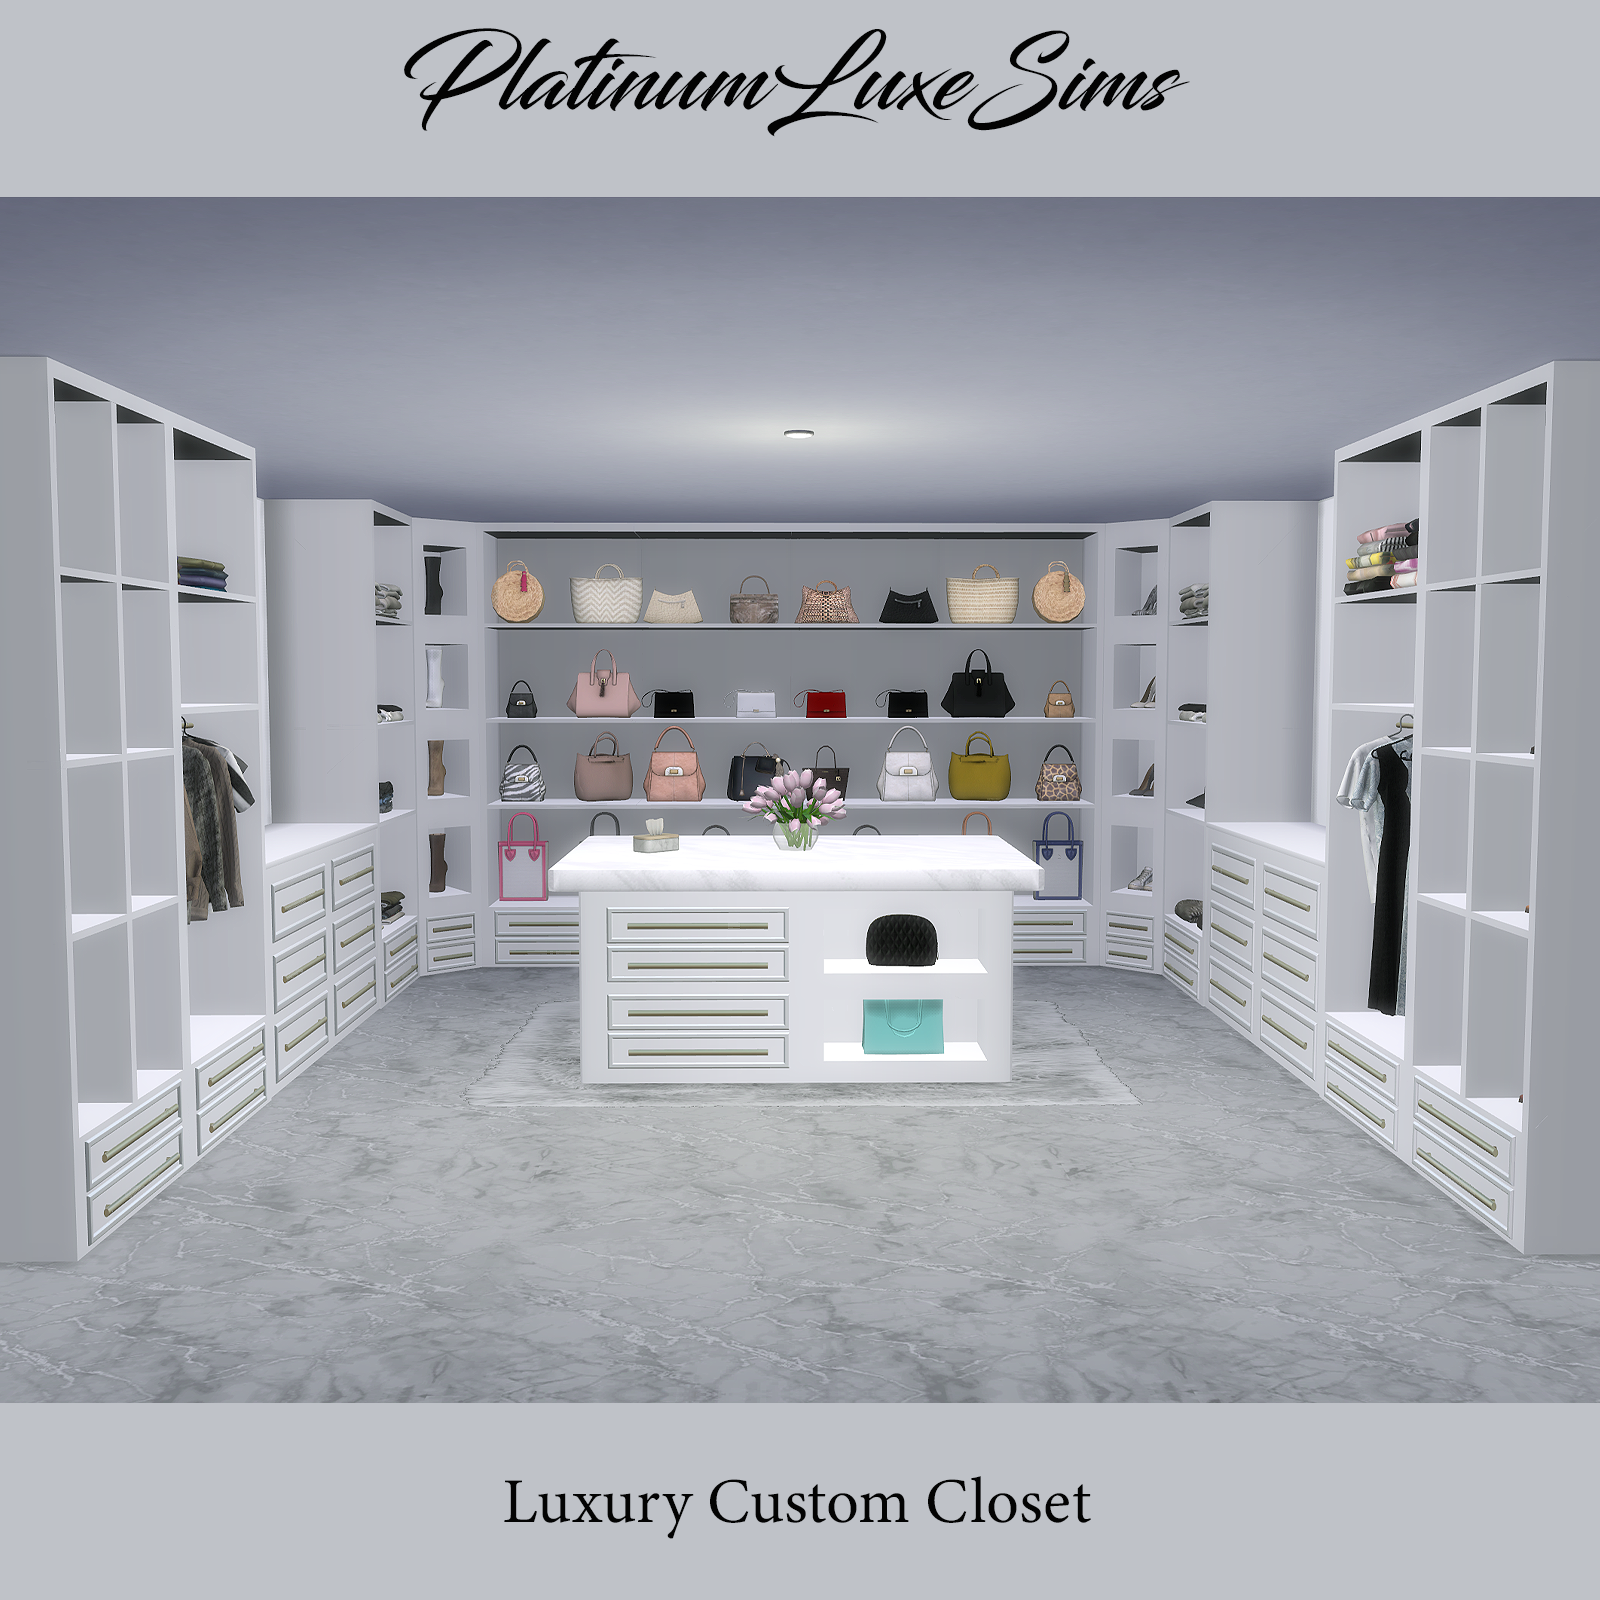 Luxury Custom Closet - The Sims 4 Build / Buy - CurseForge